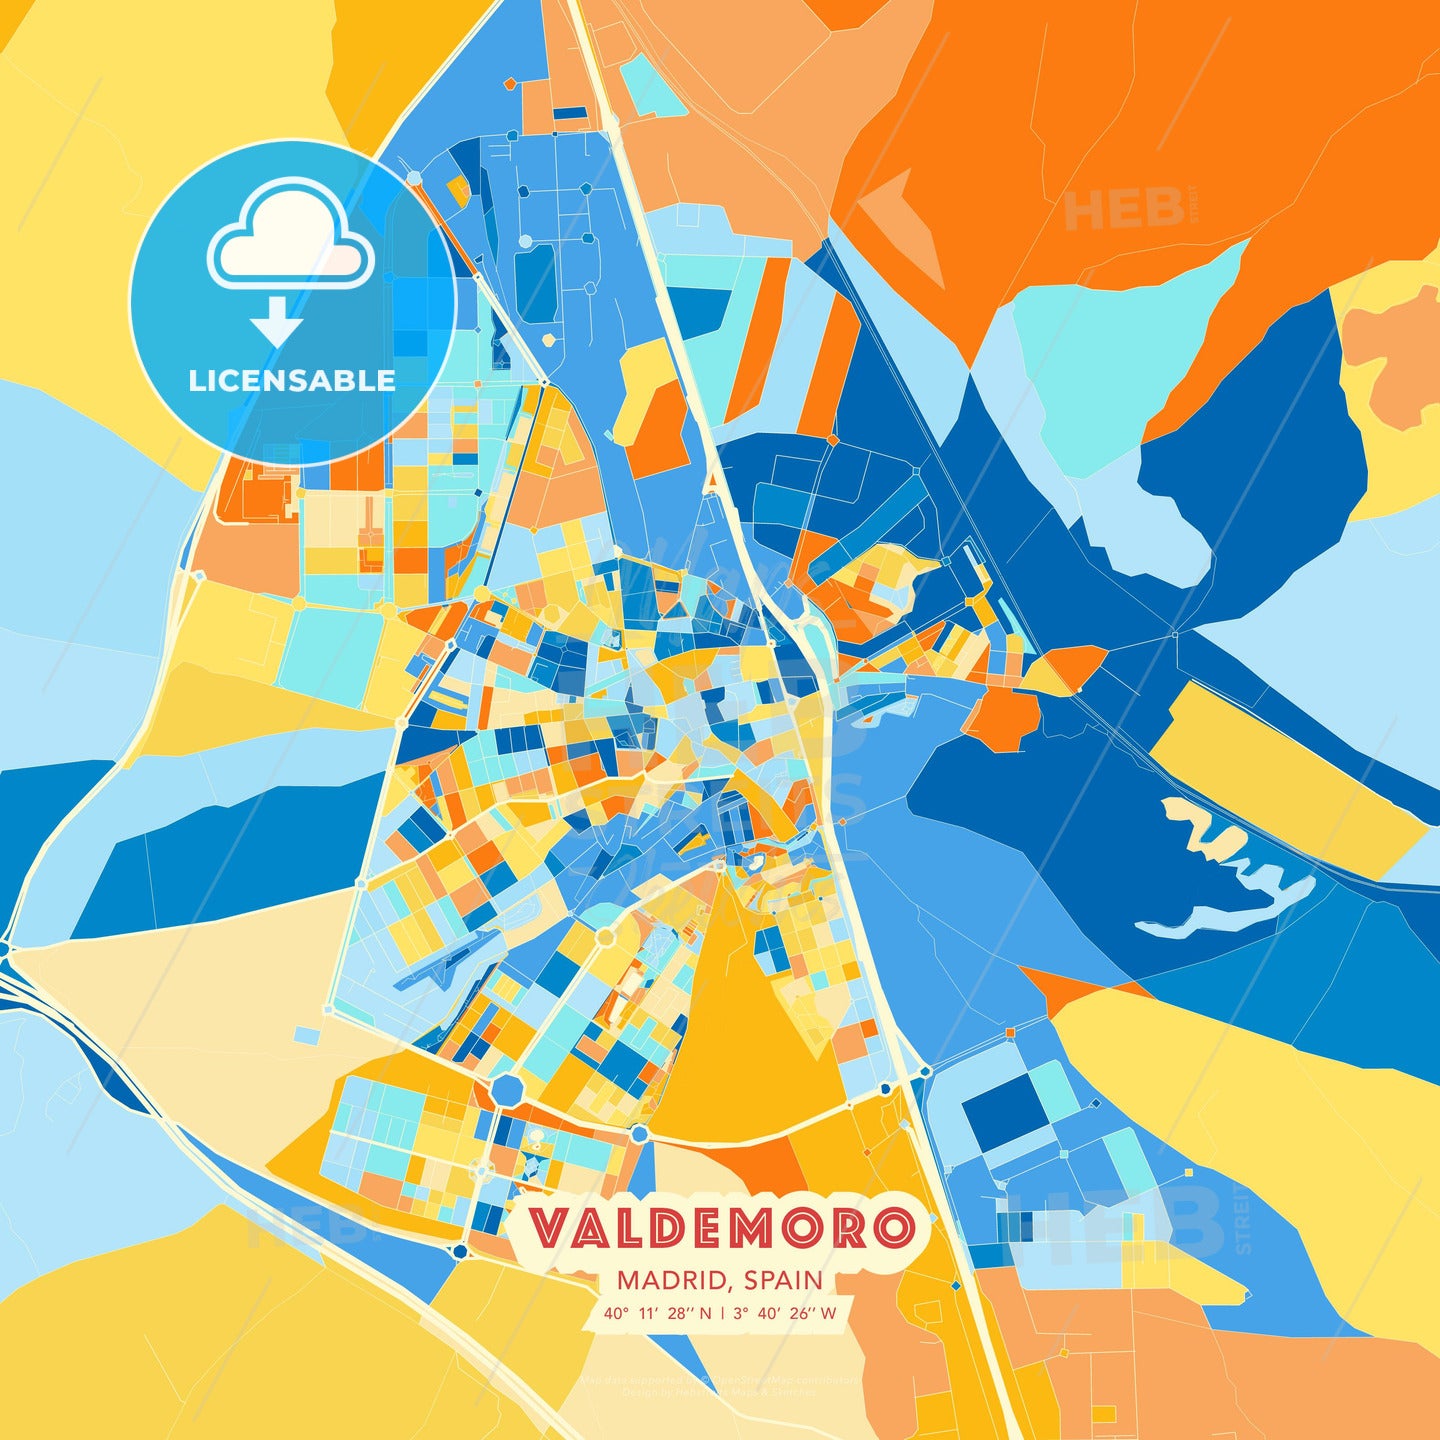 Valdemoro, Madrid, Spain, map - HEBSTREITS Sketches